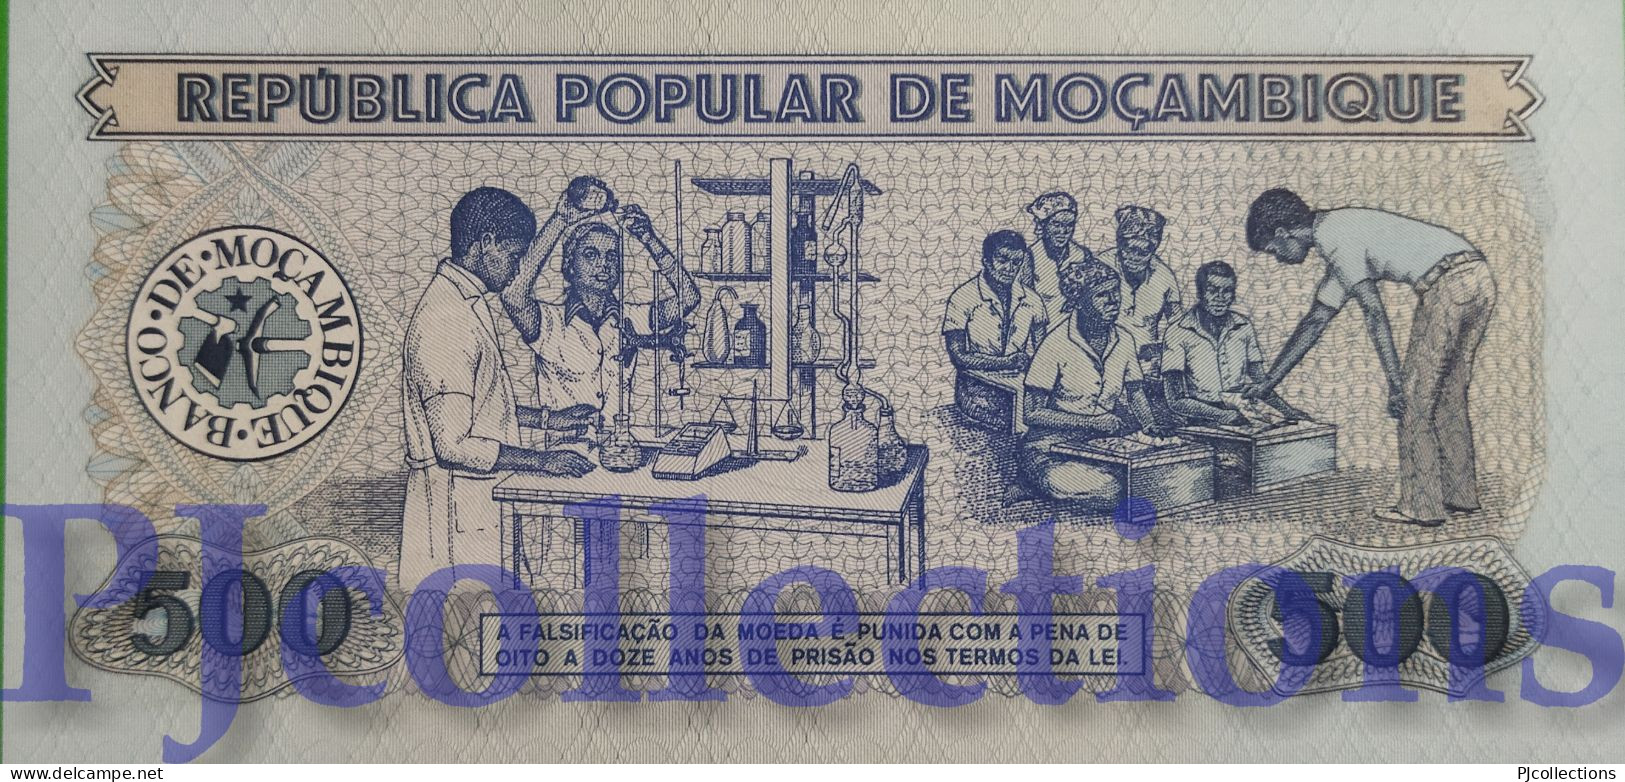 MOZAMBIQUE 500 ESCUDOS 1980 PICK 127 UNC LOW SERIAL NUMBER "AA0003686" - Mozambique